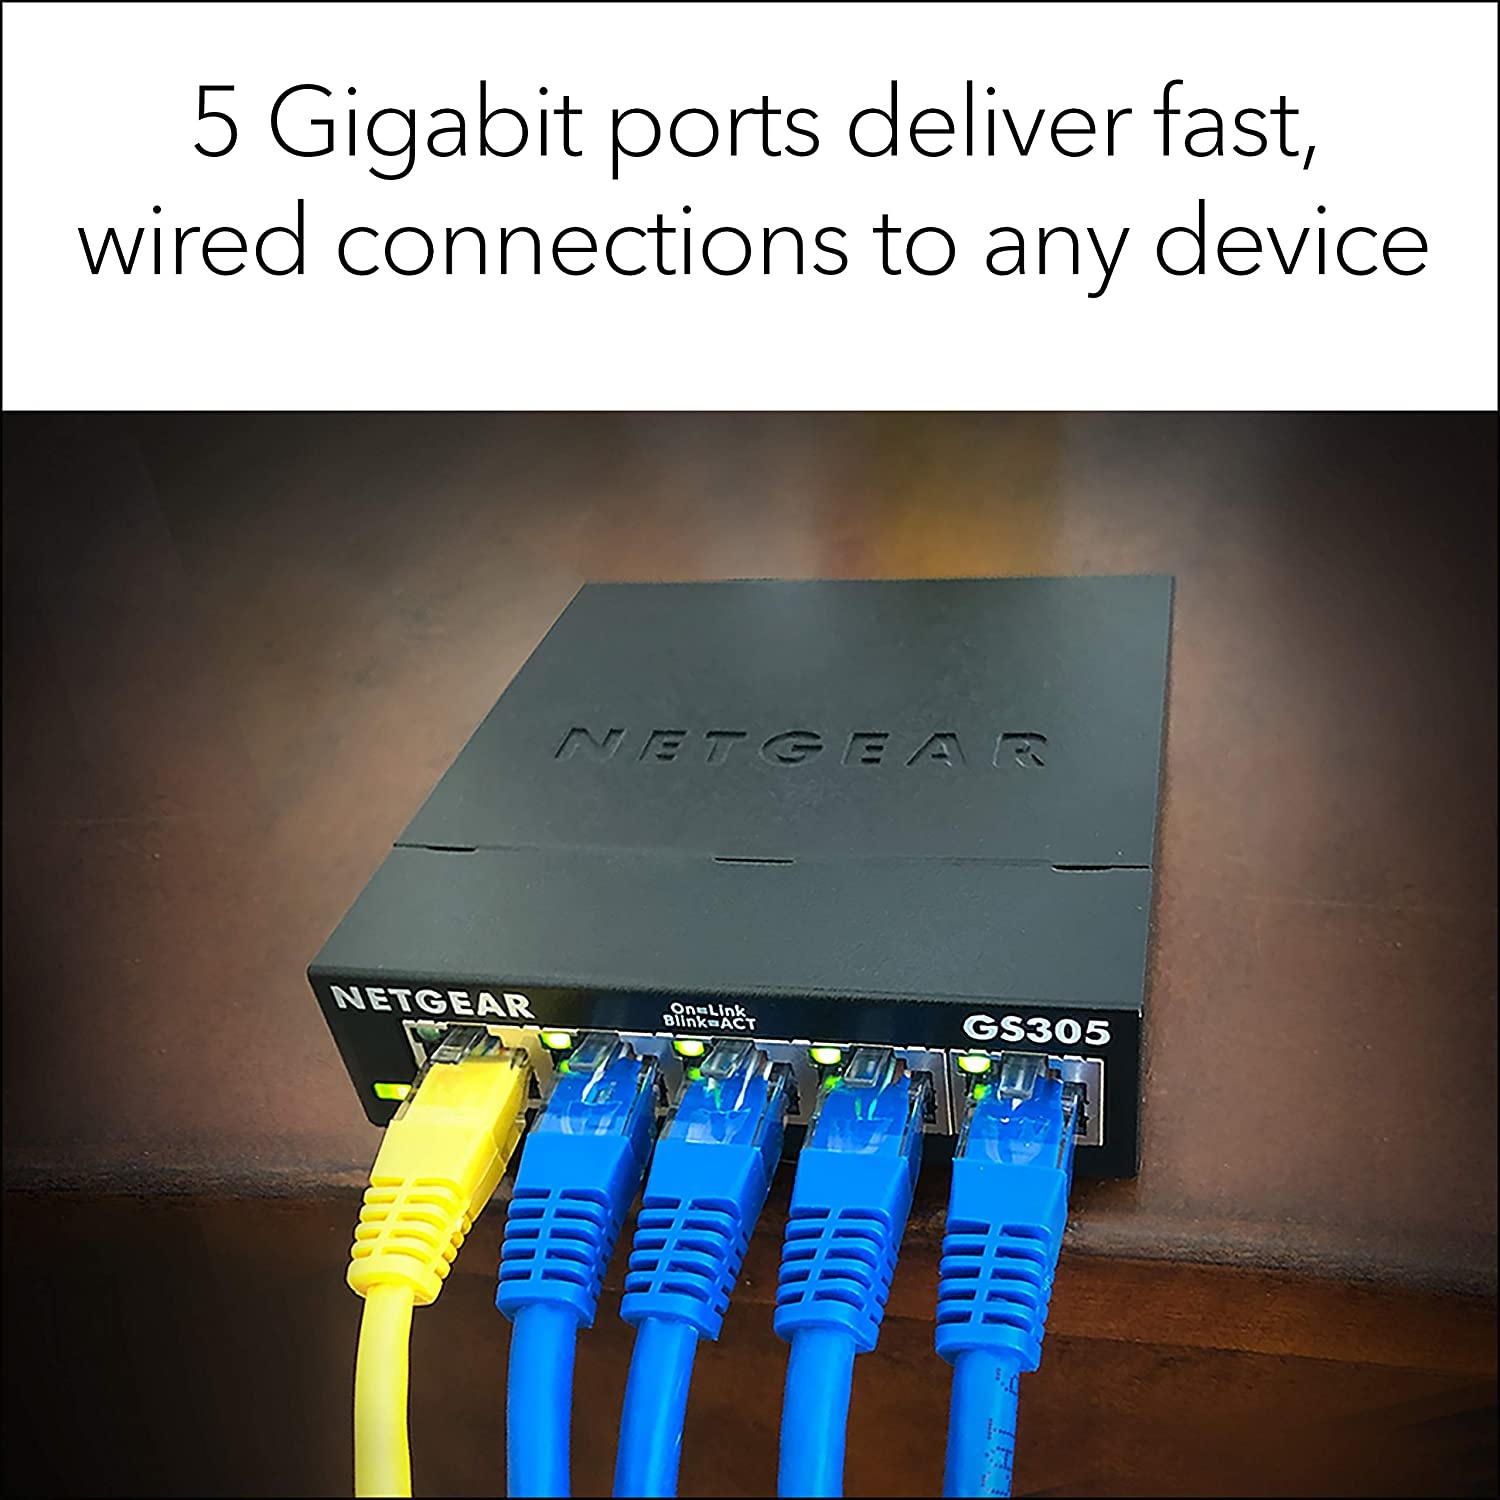 NETGEAR 5-Port Gigabit Ethernet Plus Switch (GS305E) - Desktop or Wall  Mount, Home Network Hub, Office Ethernet Splitter, Silent Operation